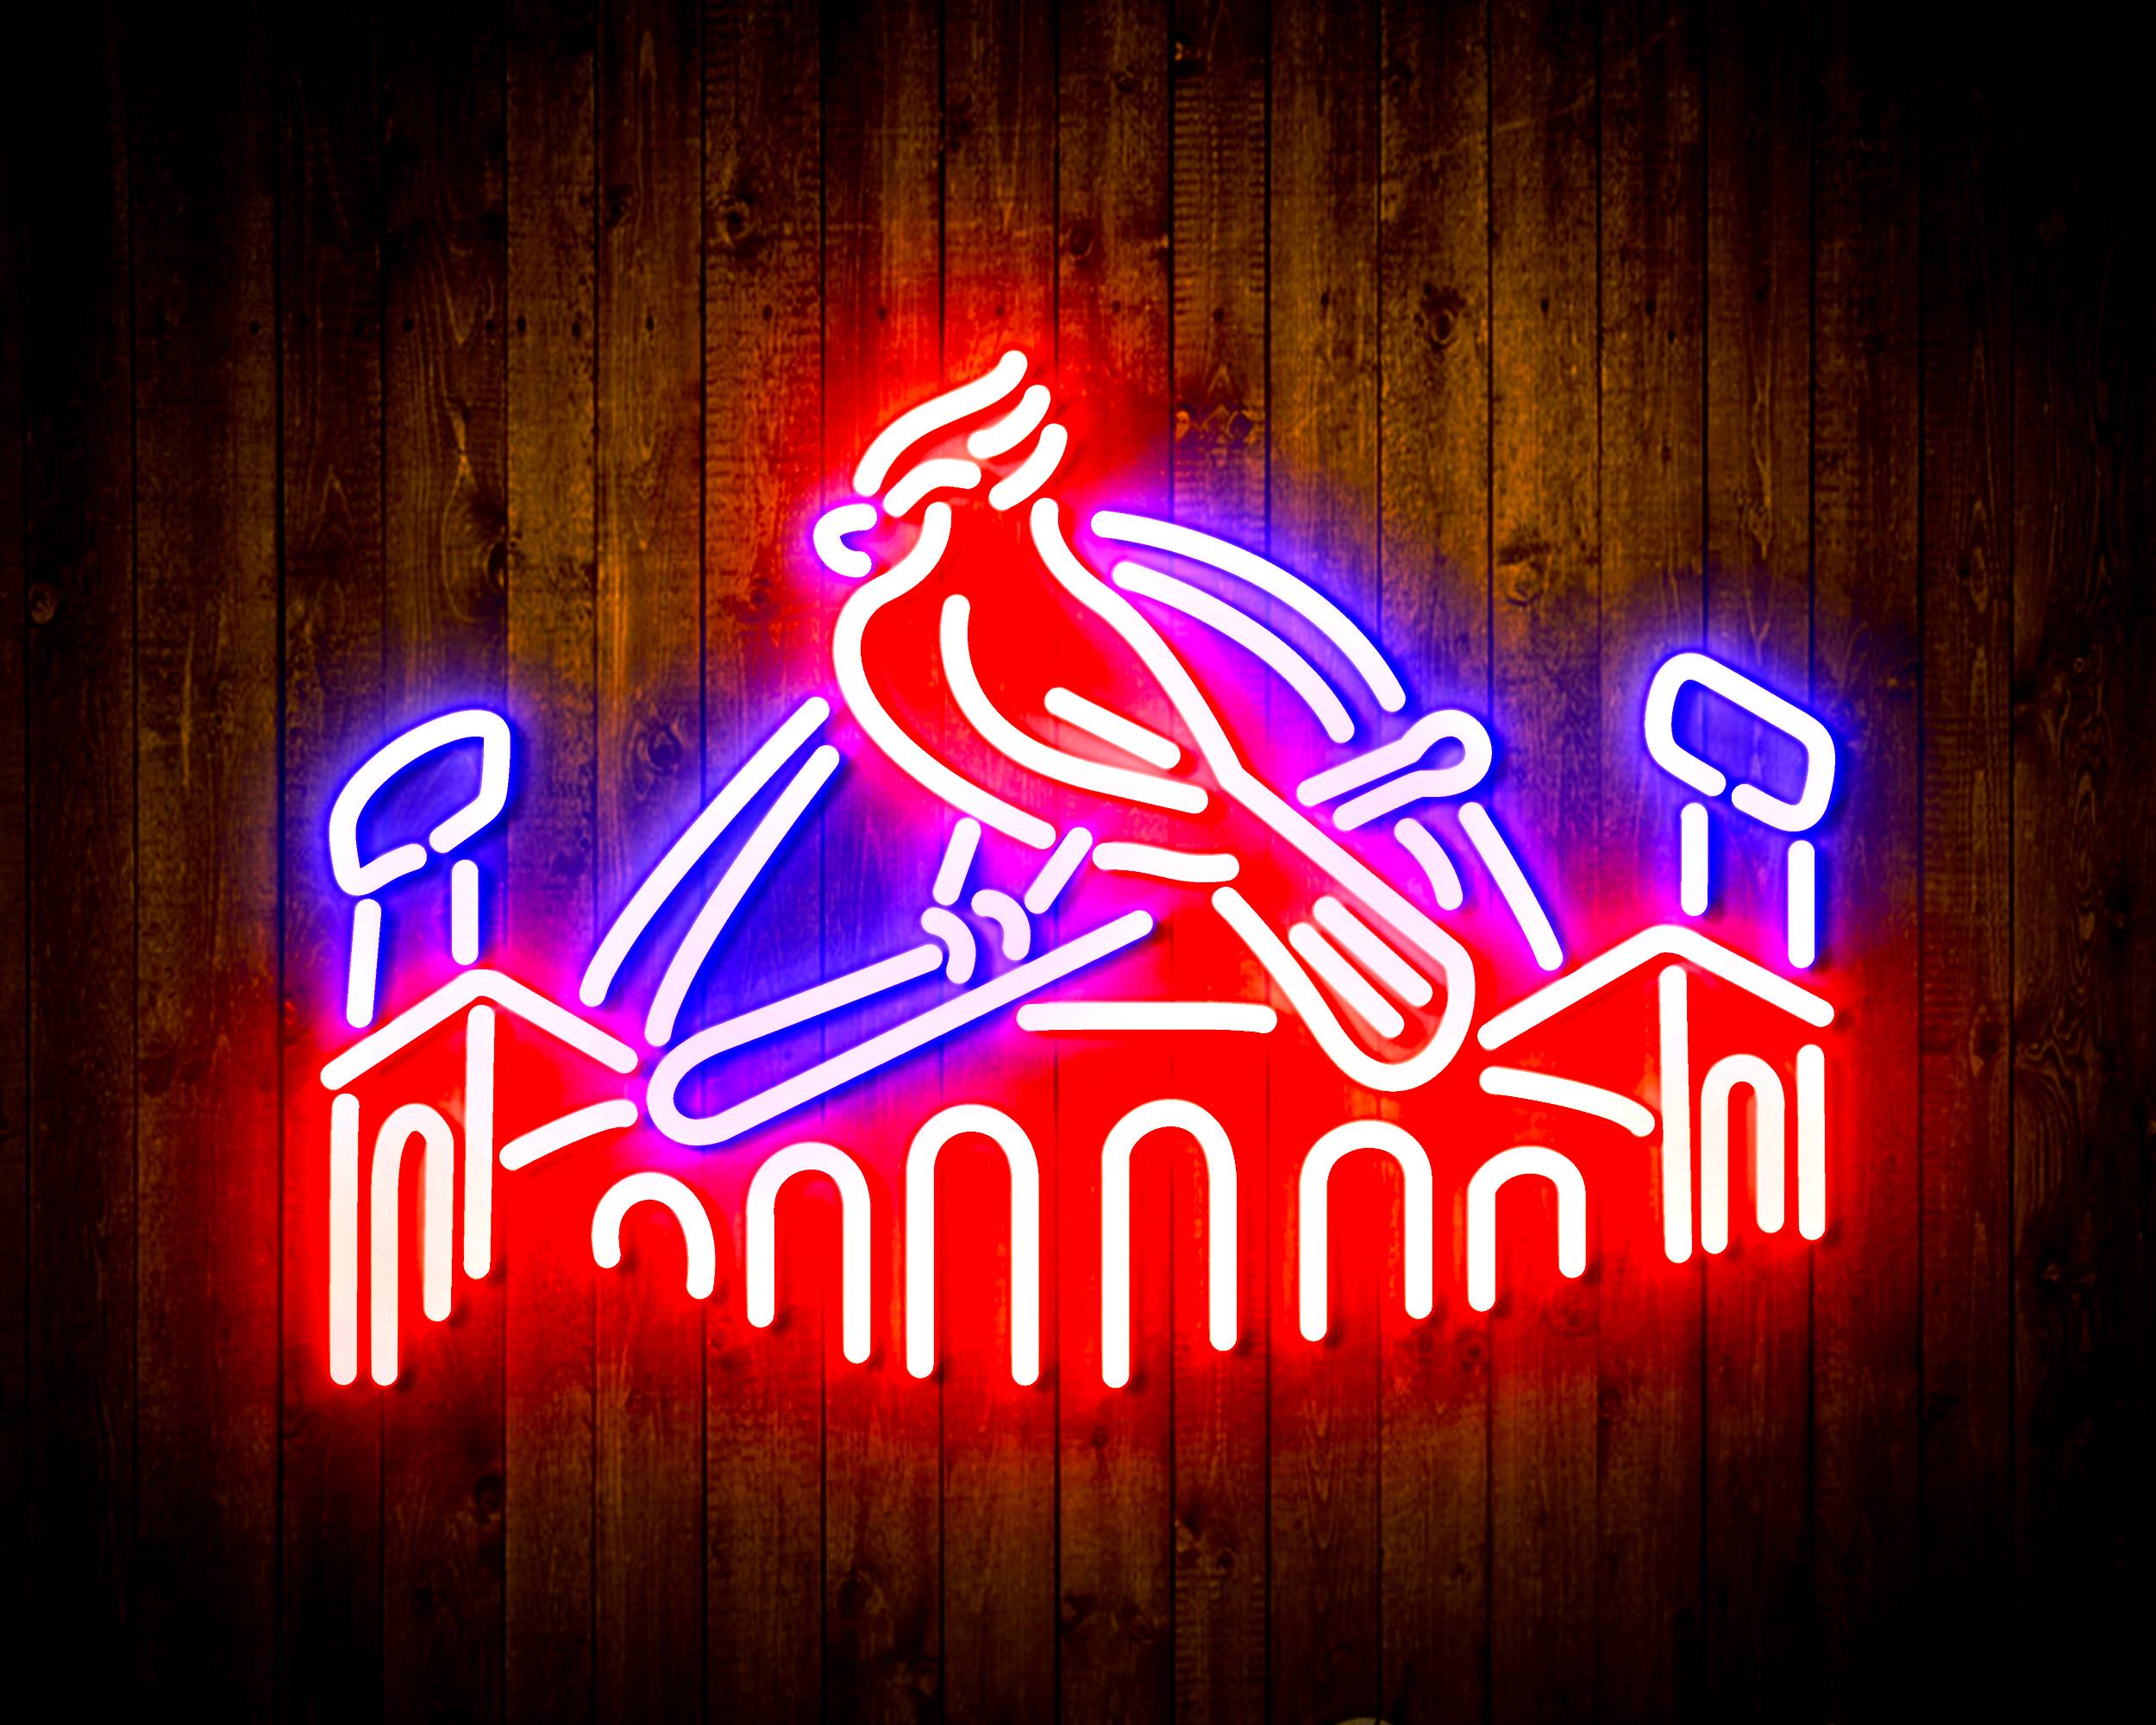 Budweiser with Cardinal Handmade LED Neon Light Sign